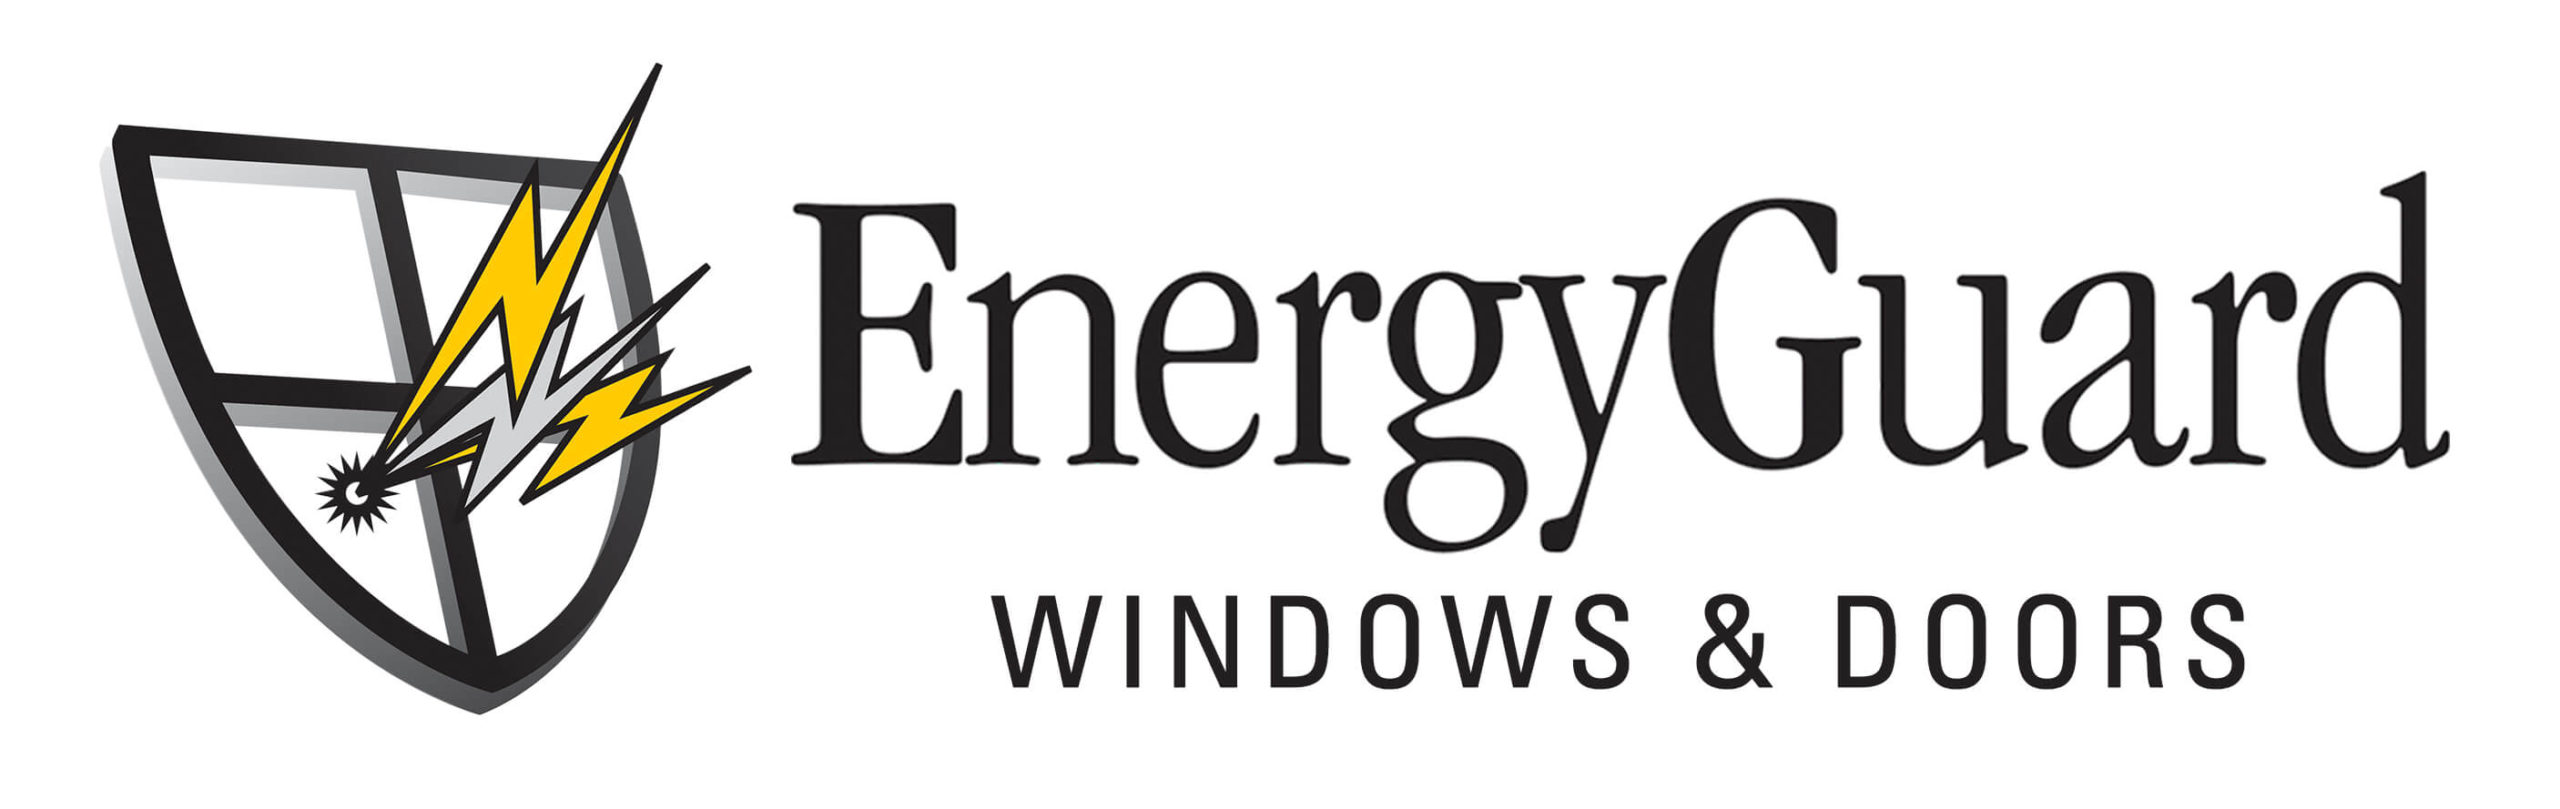 EnergyGuard Windows & Doors review